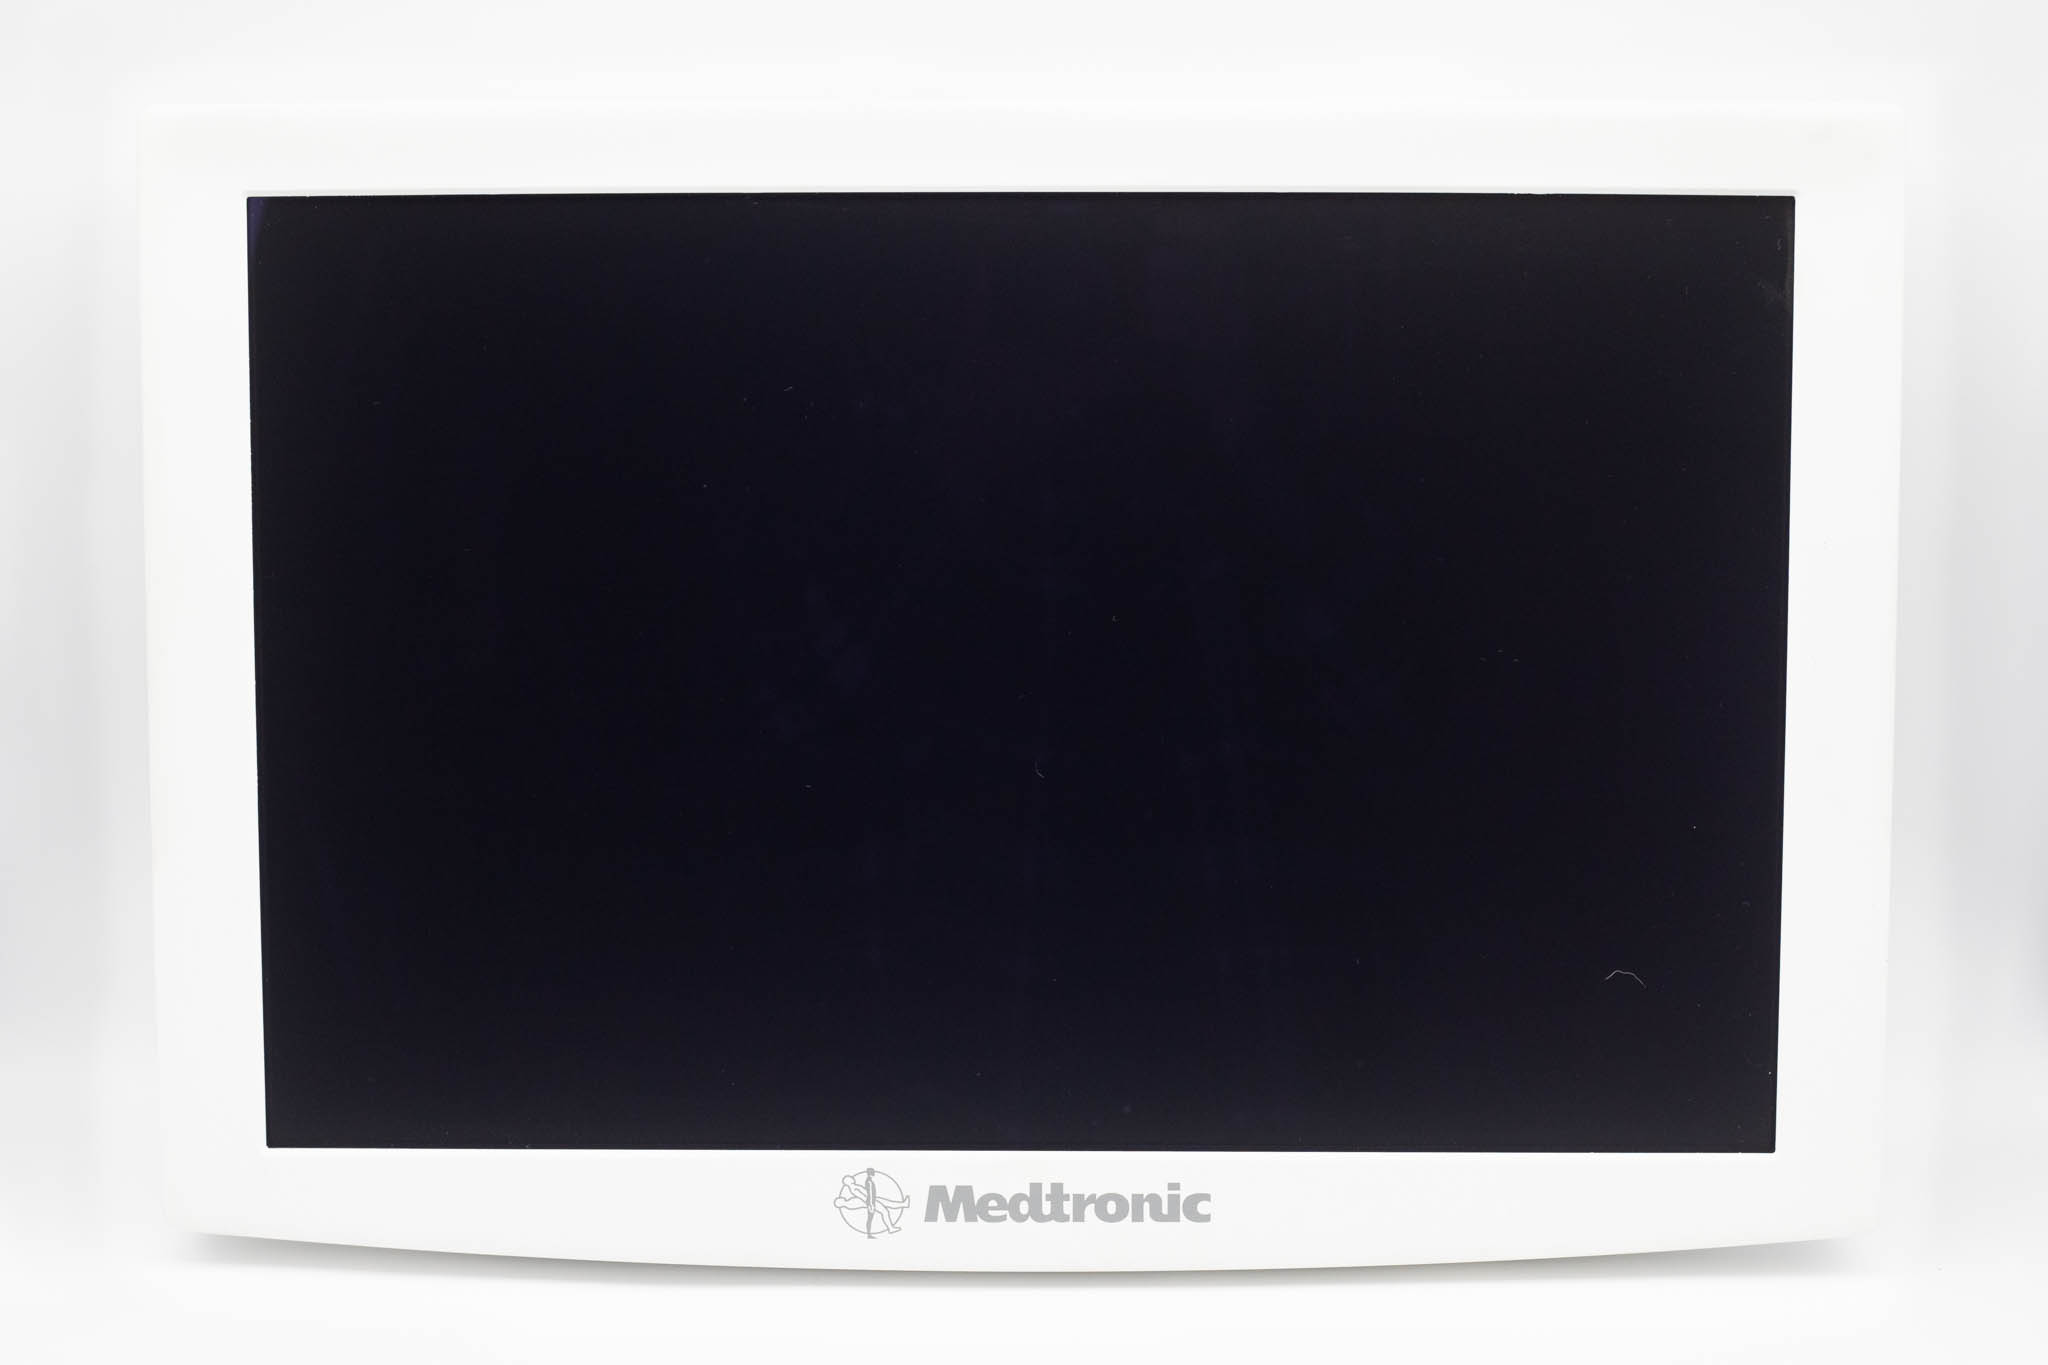 Medtronic Medical Grade Monitor - SC-WU24-A3316